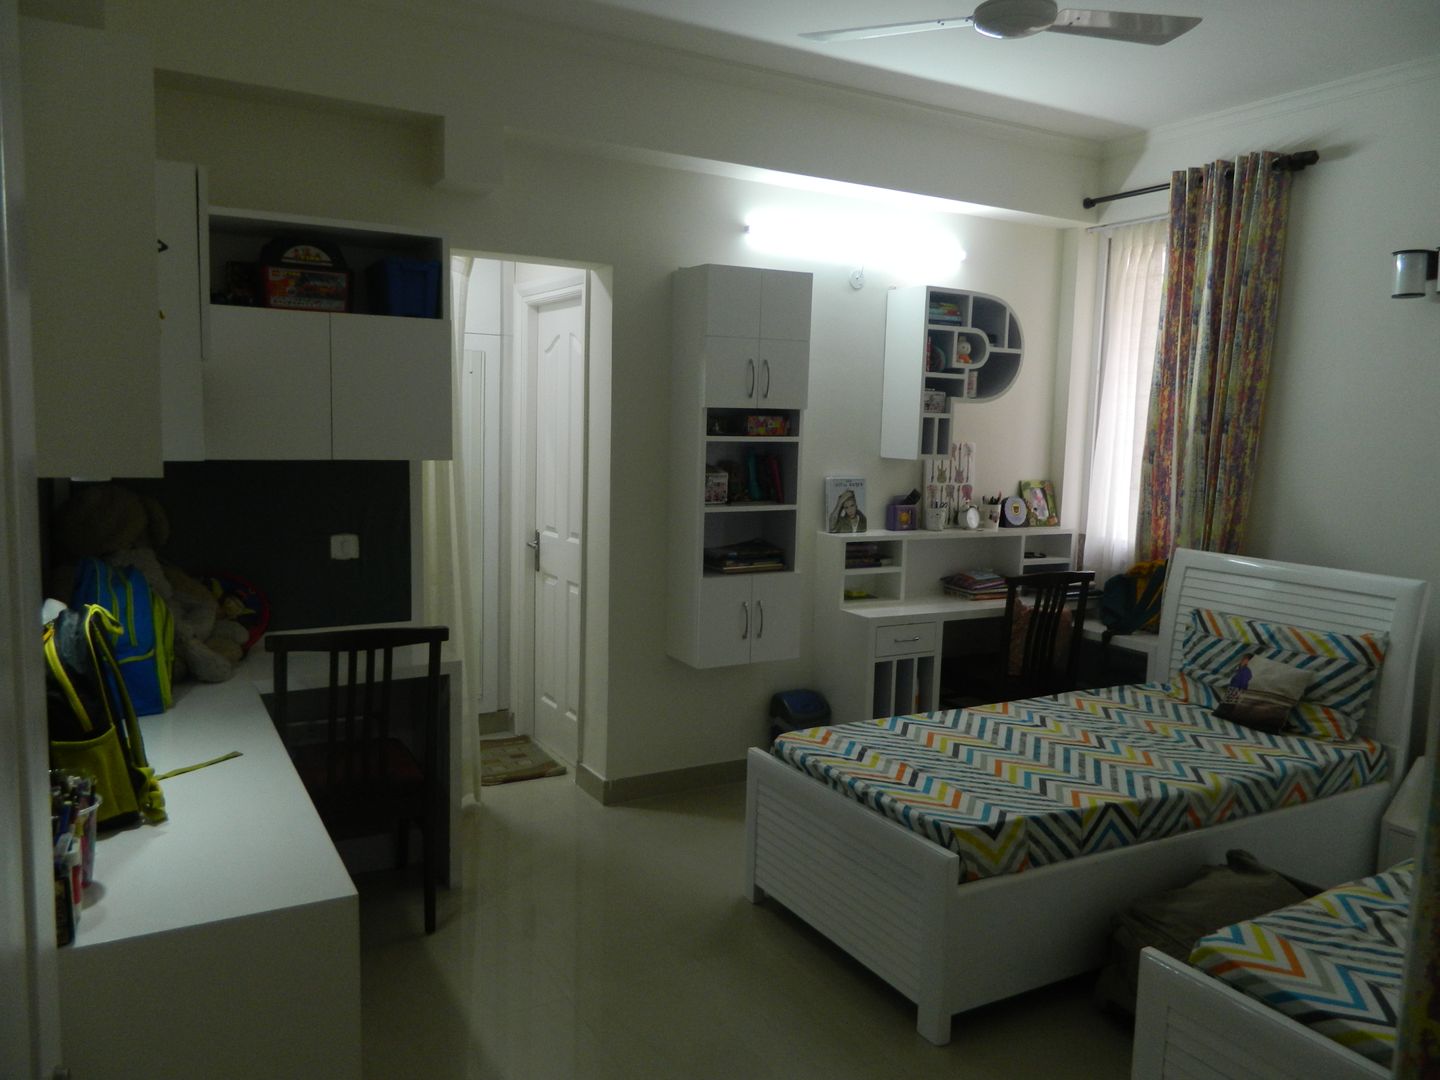 Kitchen & Interiors, Sector 46 Noida, hearth n home hearth n home غرف نوم صغيرة